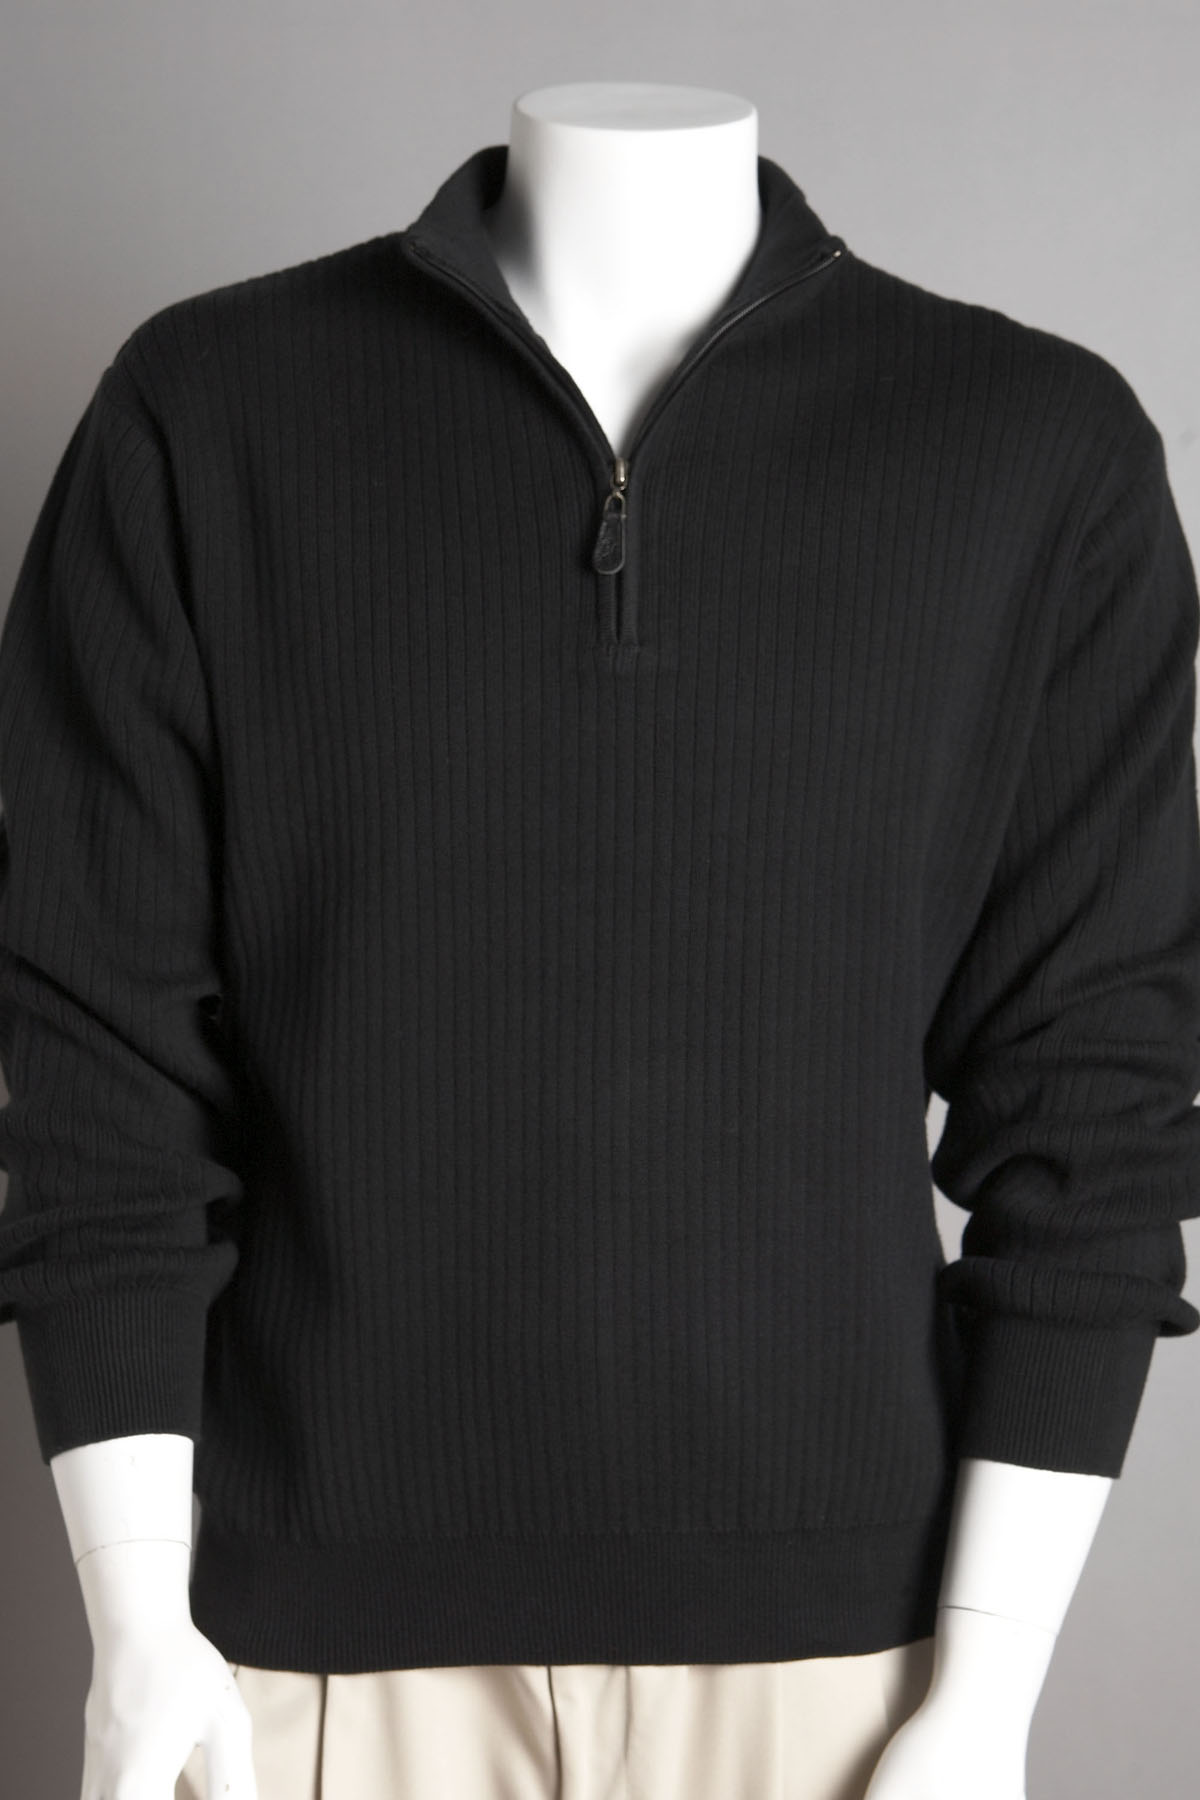 Greg Norman GNBAS103 - Drop-Needle Quarter Zip Mock Sweater